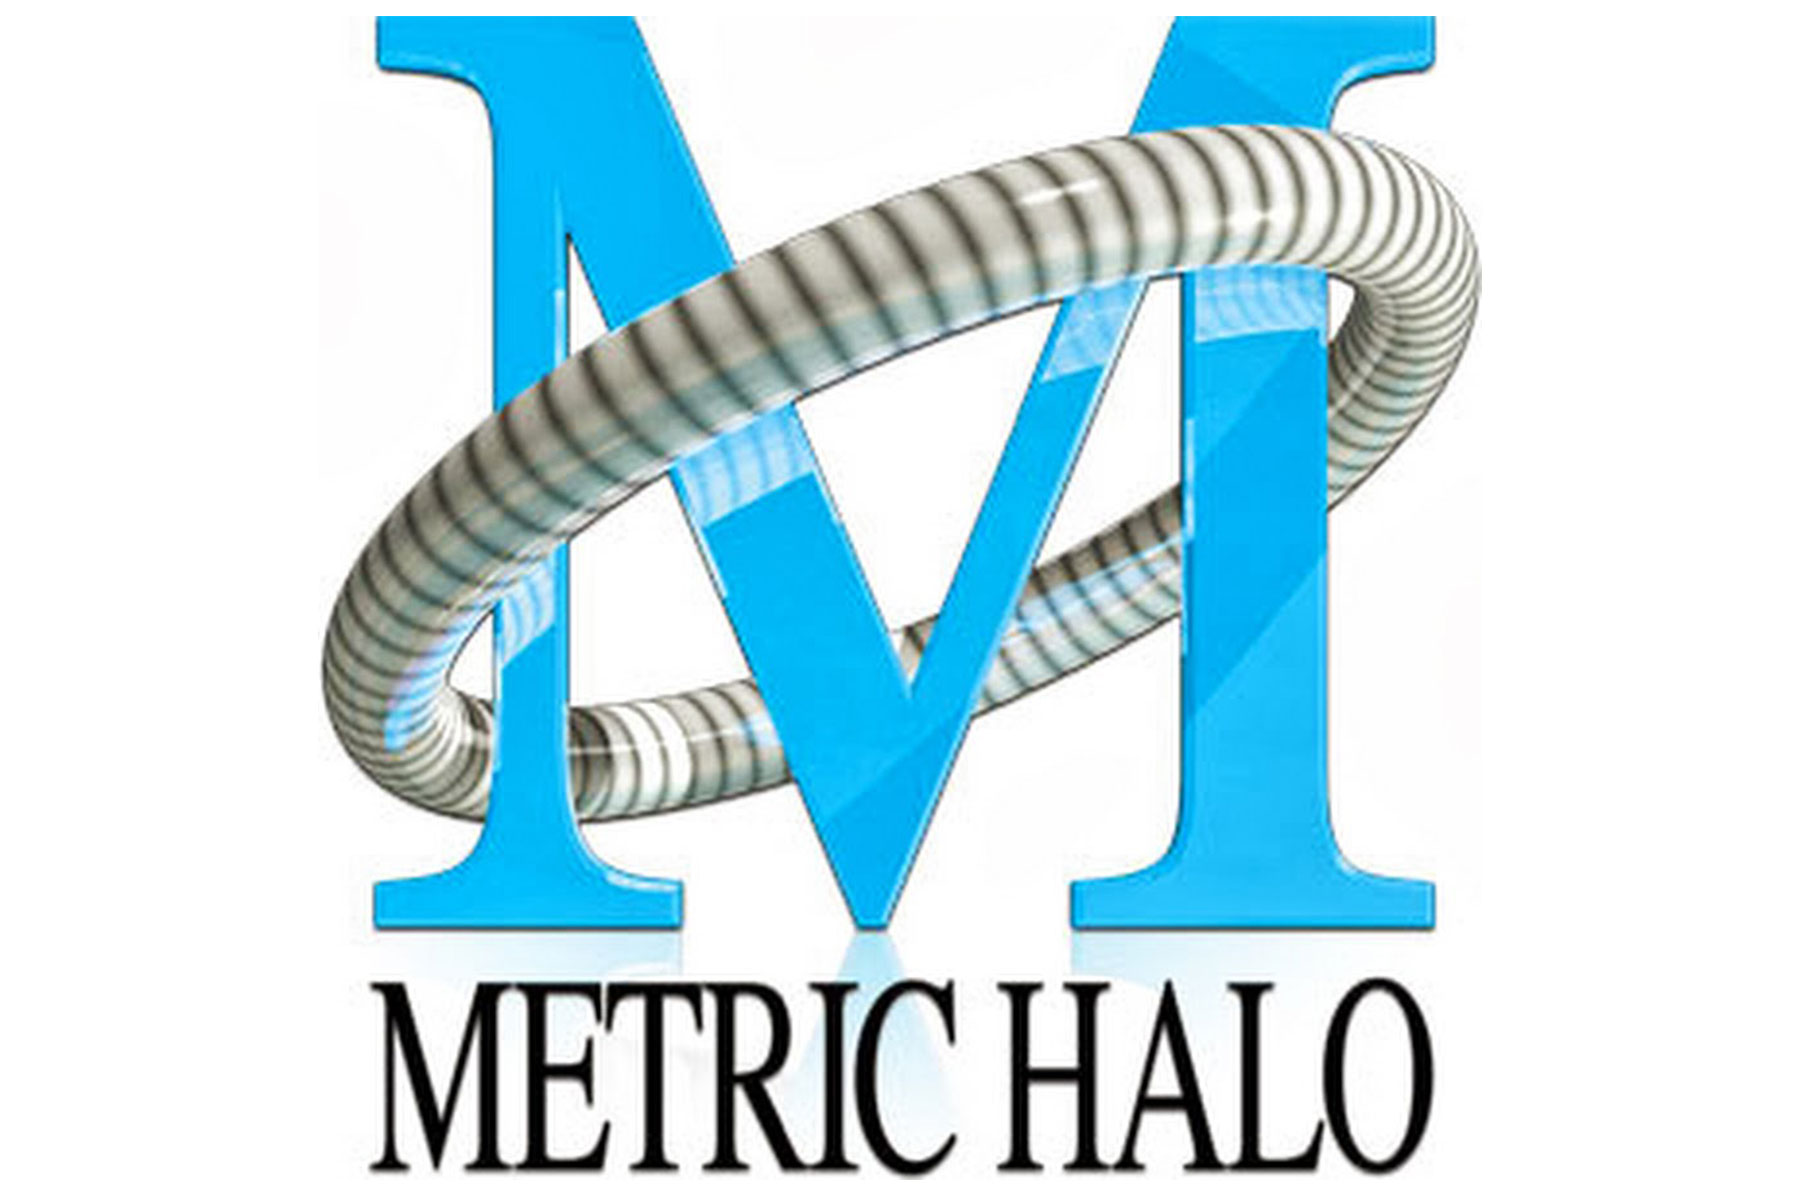 Metric Halo mkIV Analog Board Upgrade Kit for ULN-8/LIO-8 3d Image 1